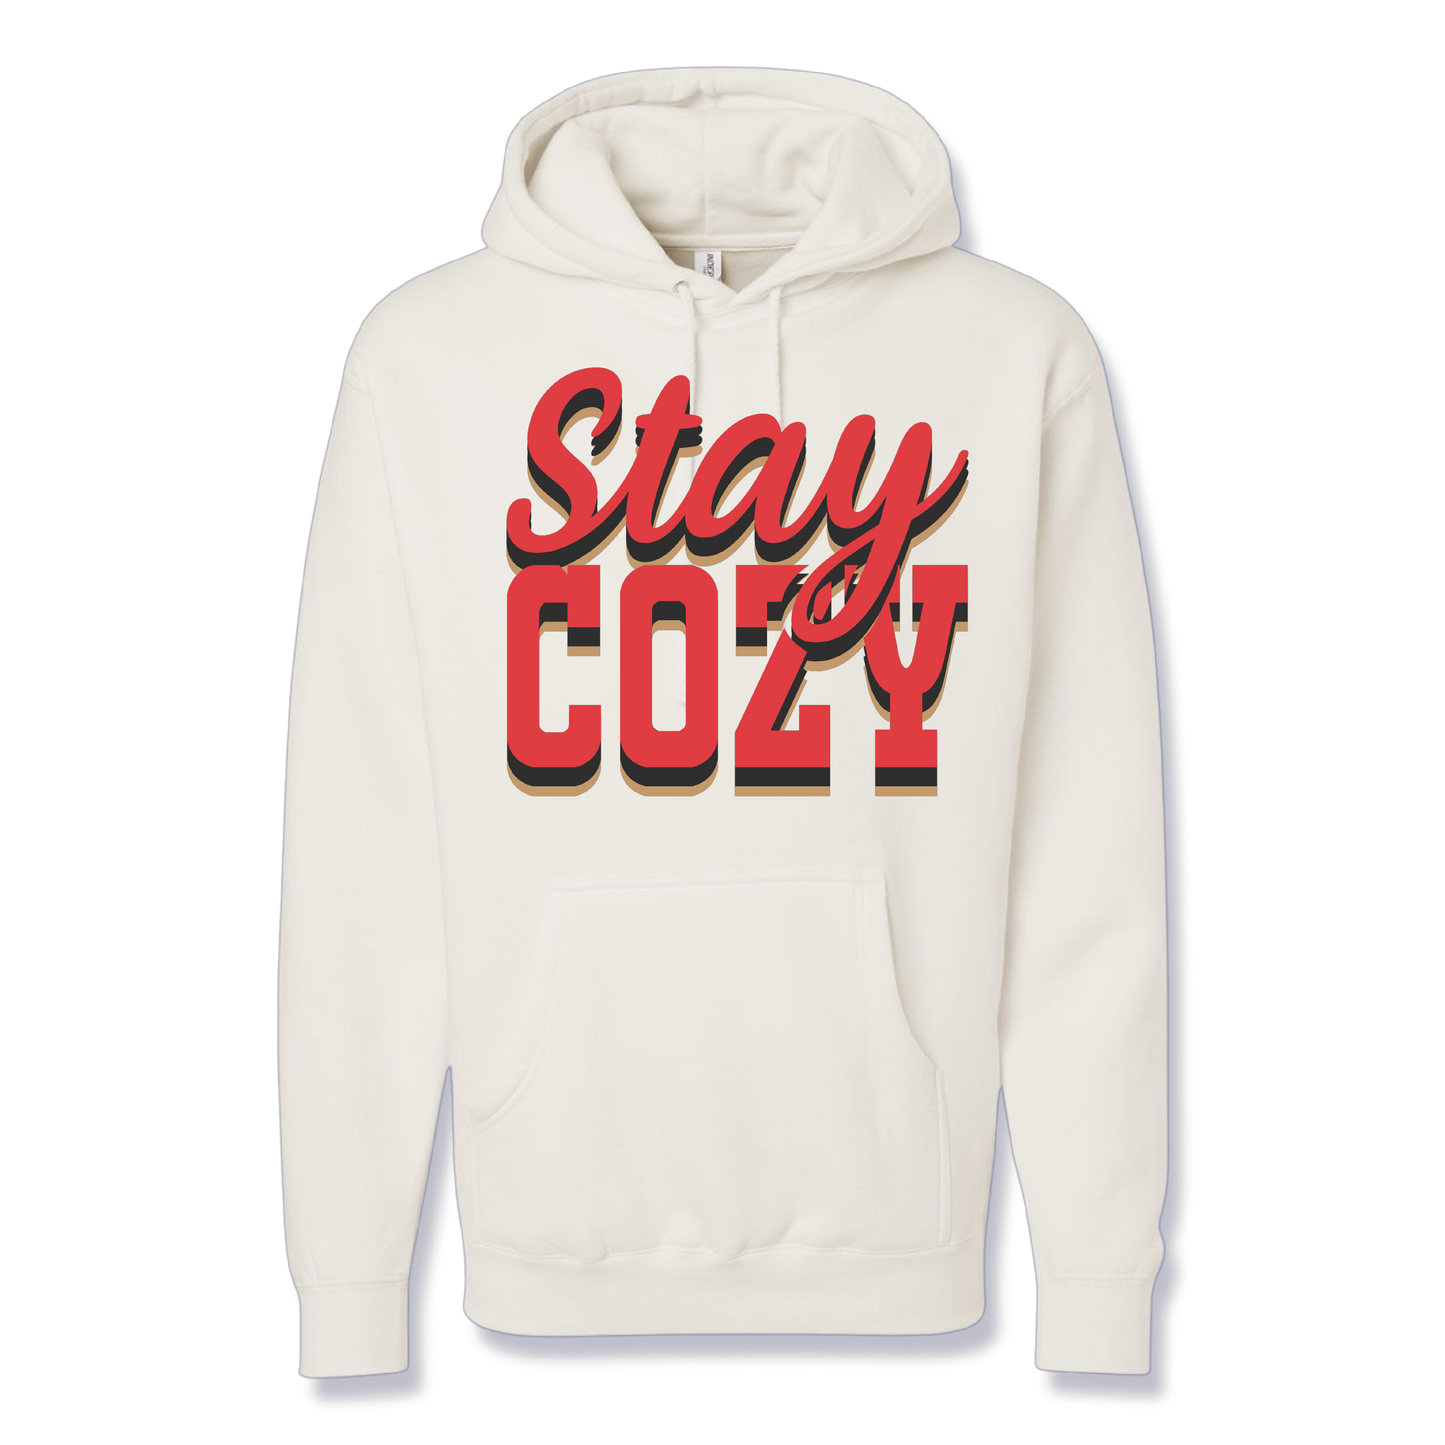 Stay Cozy (Premium Hoodie)